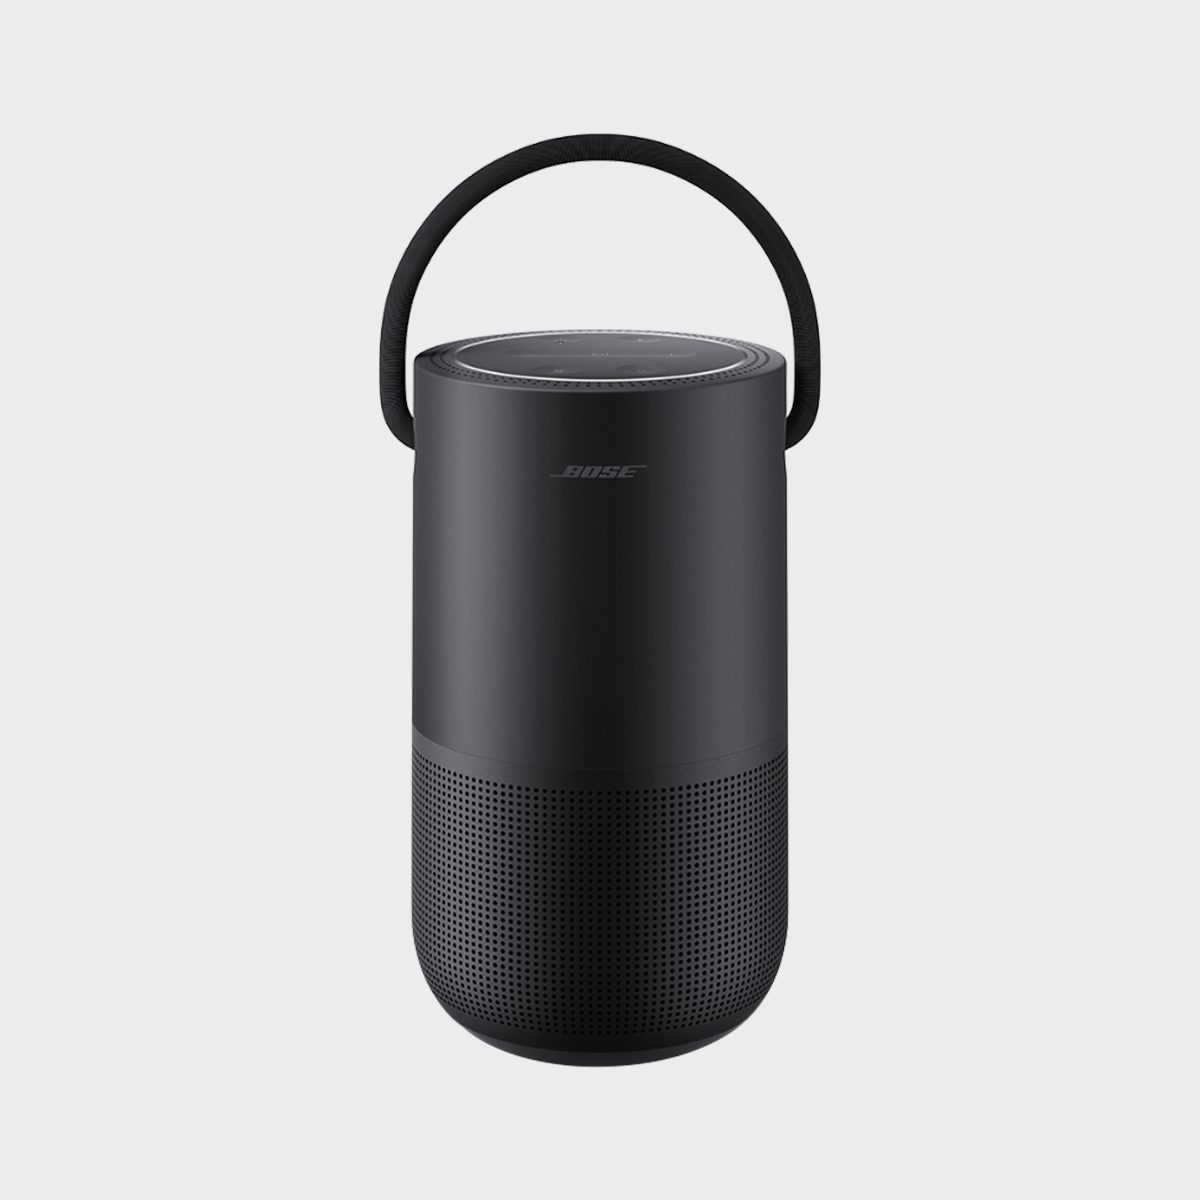 Bose Portable Smart Speaker Ecomm Bose.com